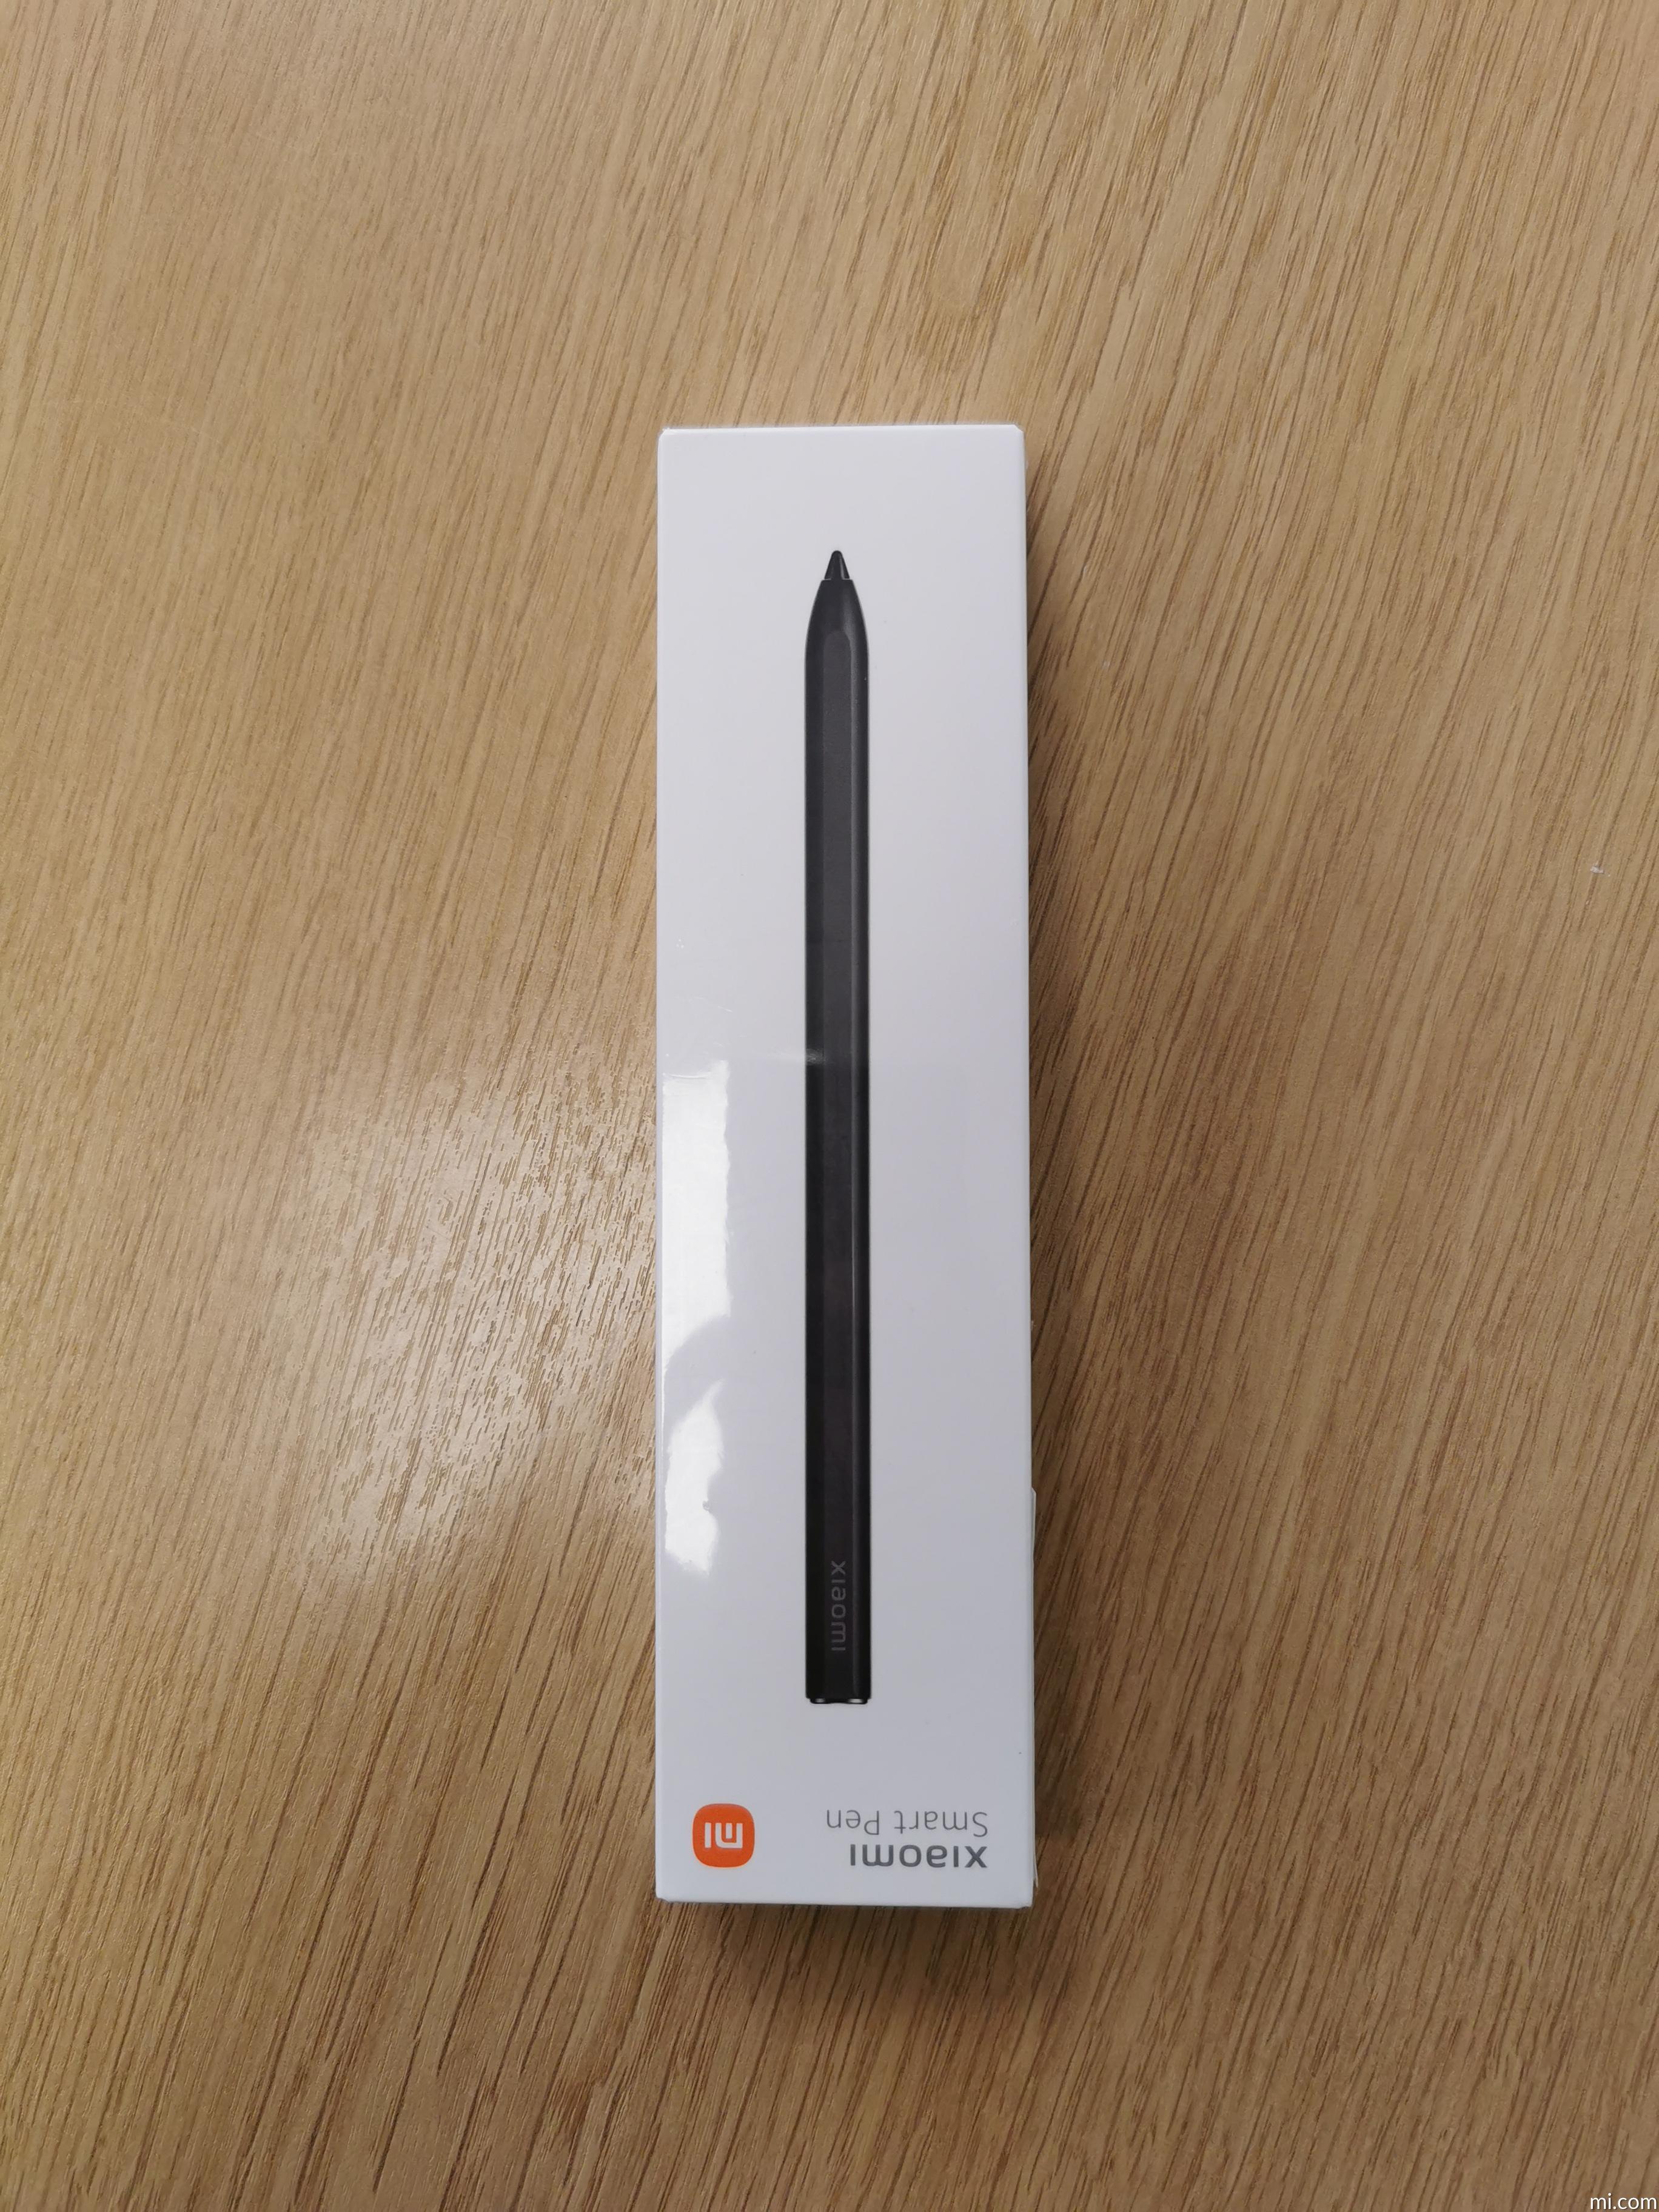 Xiaomi Smart Pen 1st Gen🖋️ VS 2nd Gen Indepth Review🔥🤔🤩#kkgaurav  #mipad5 #xiaomipad5 